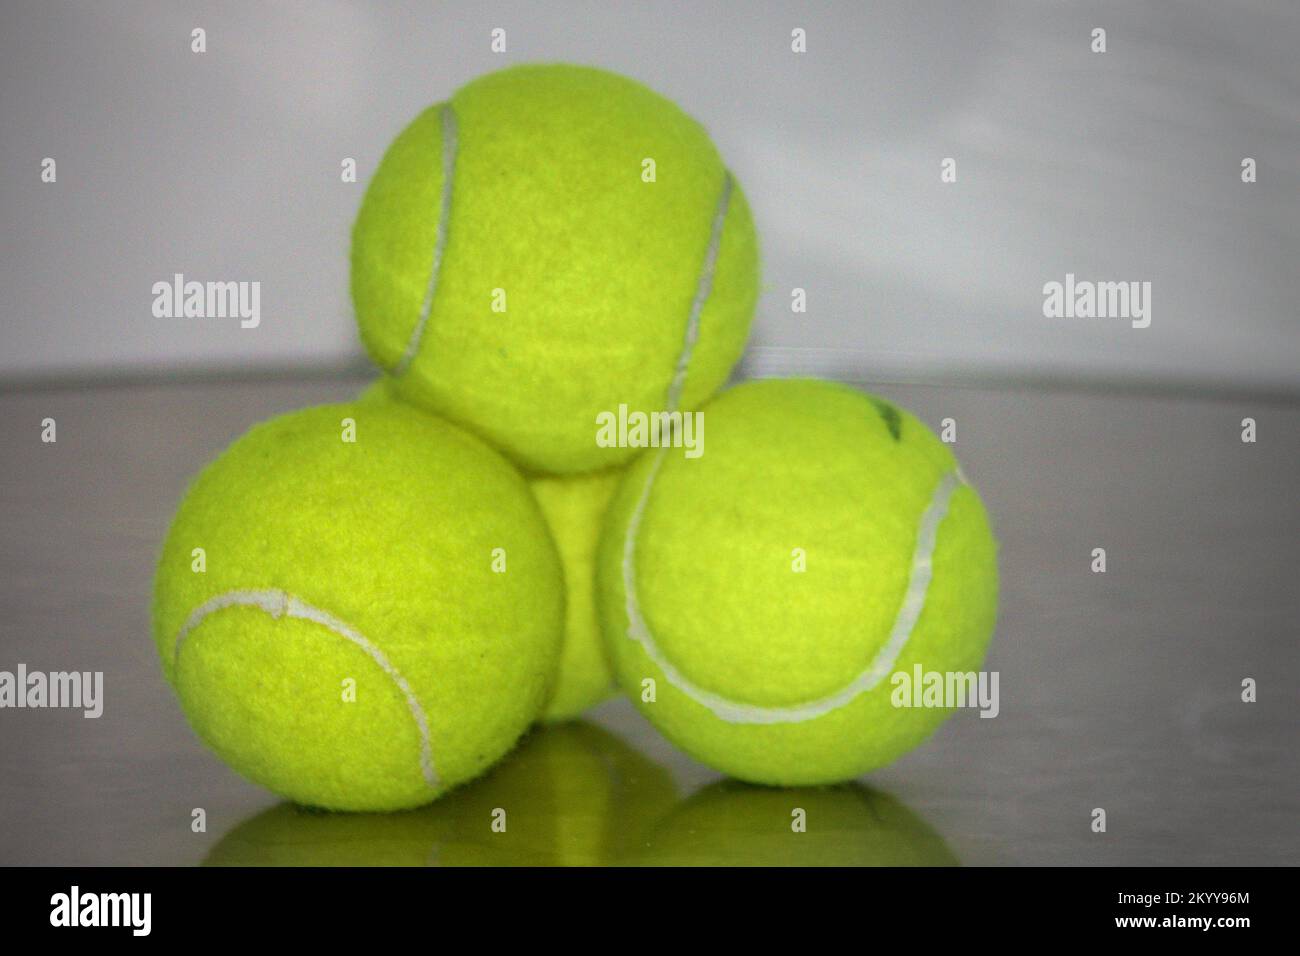 three tennis balls on a metal table Stock Photo